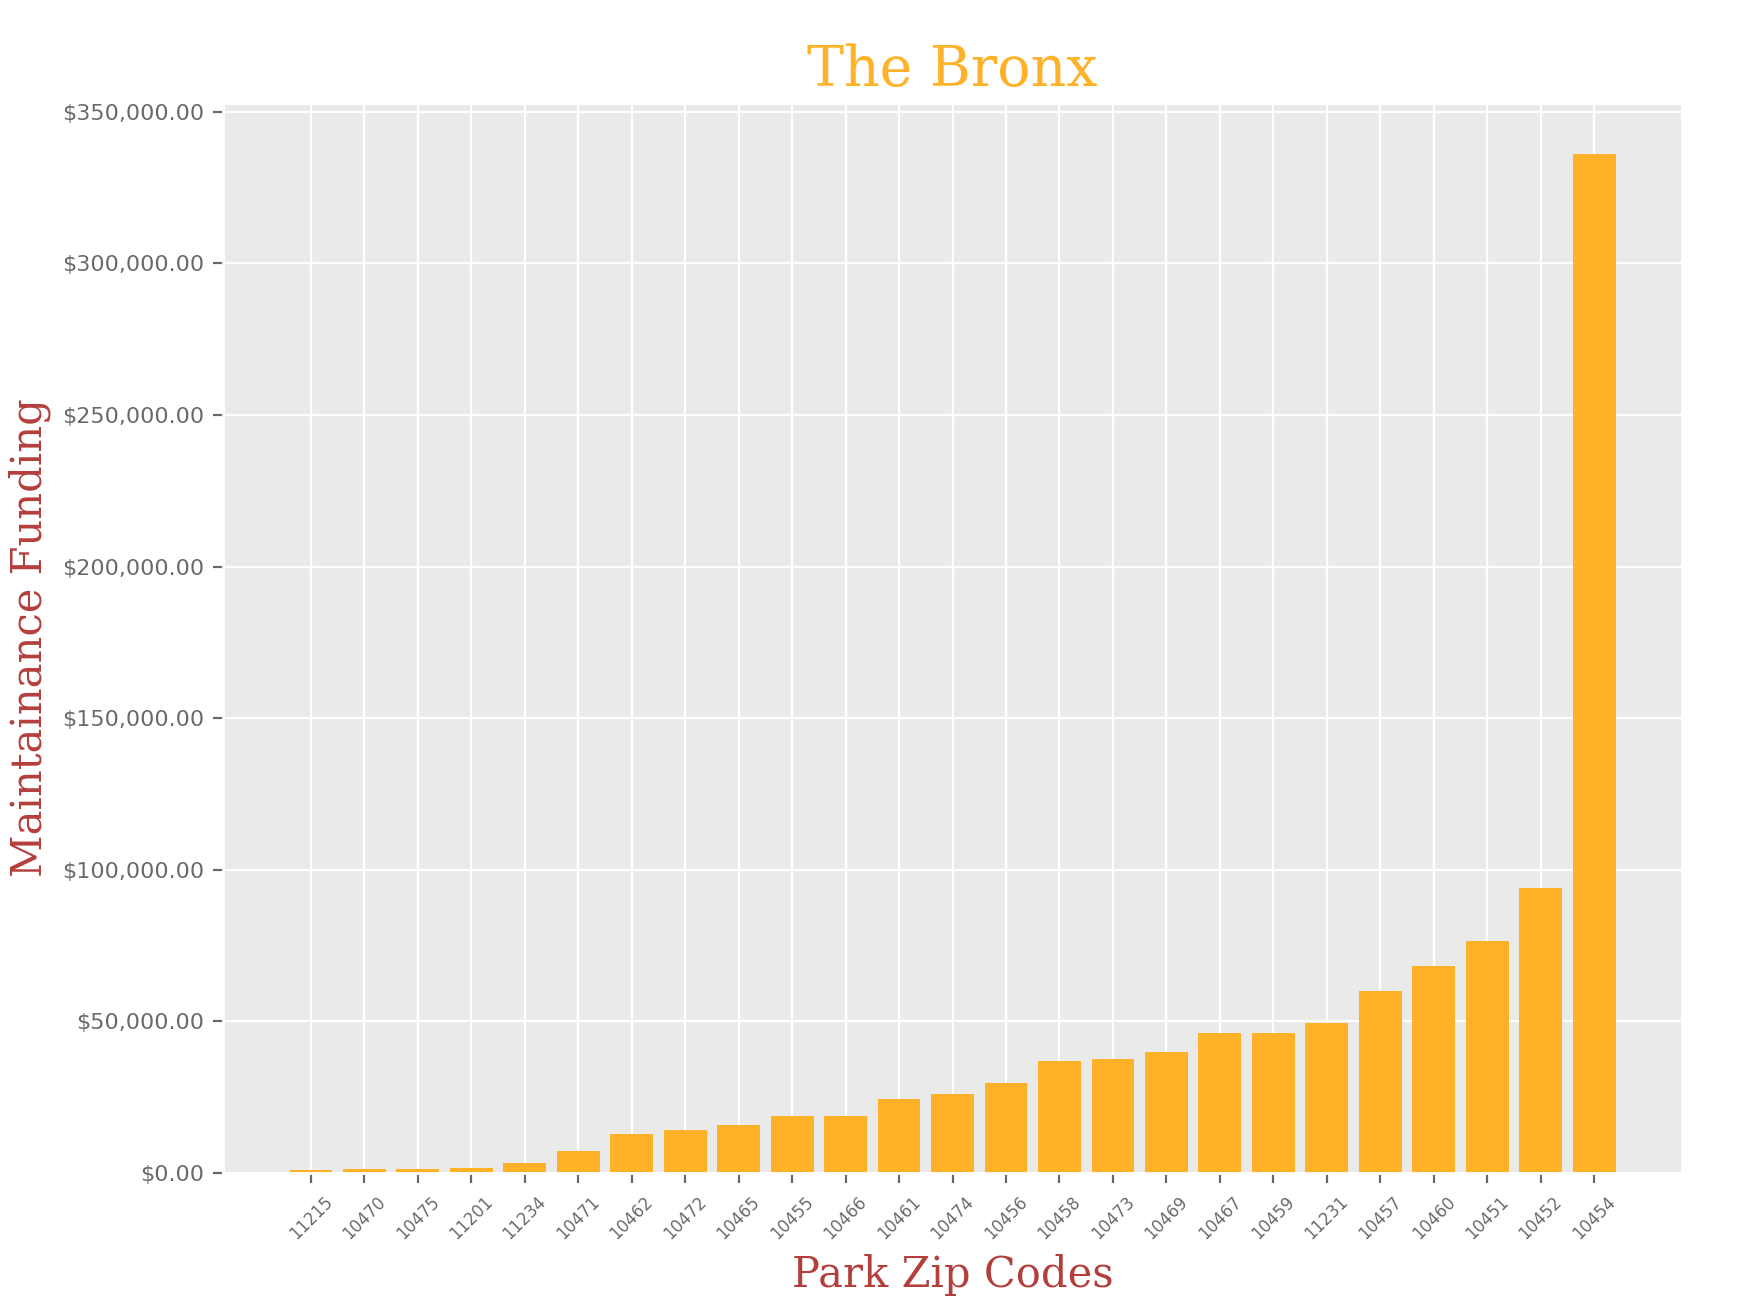 The Bronx Data